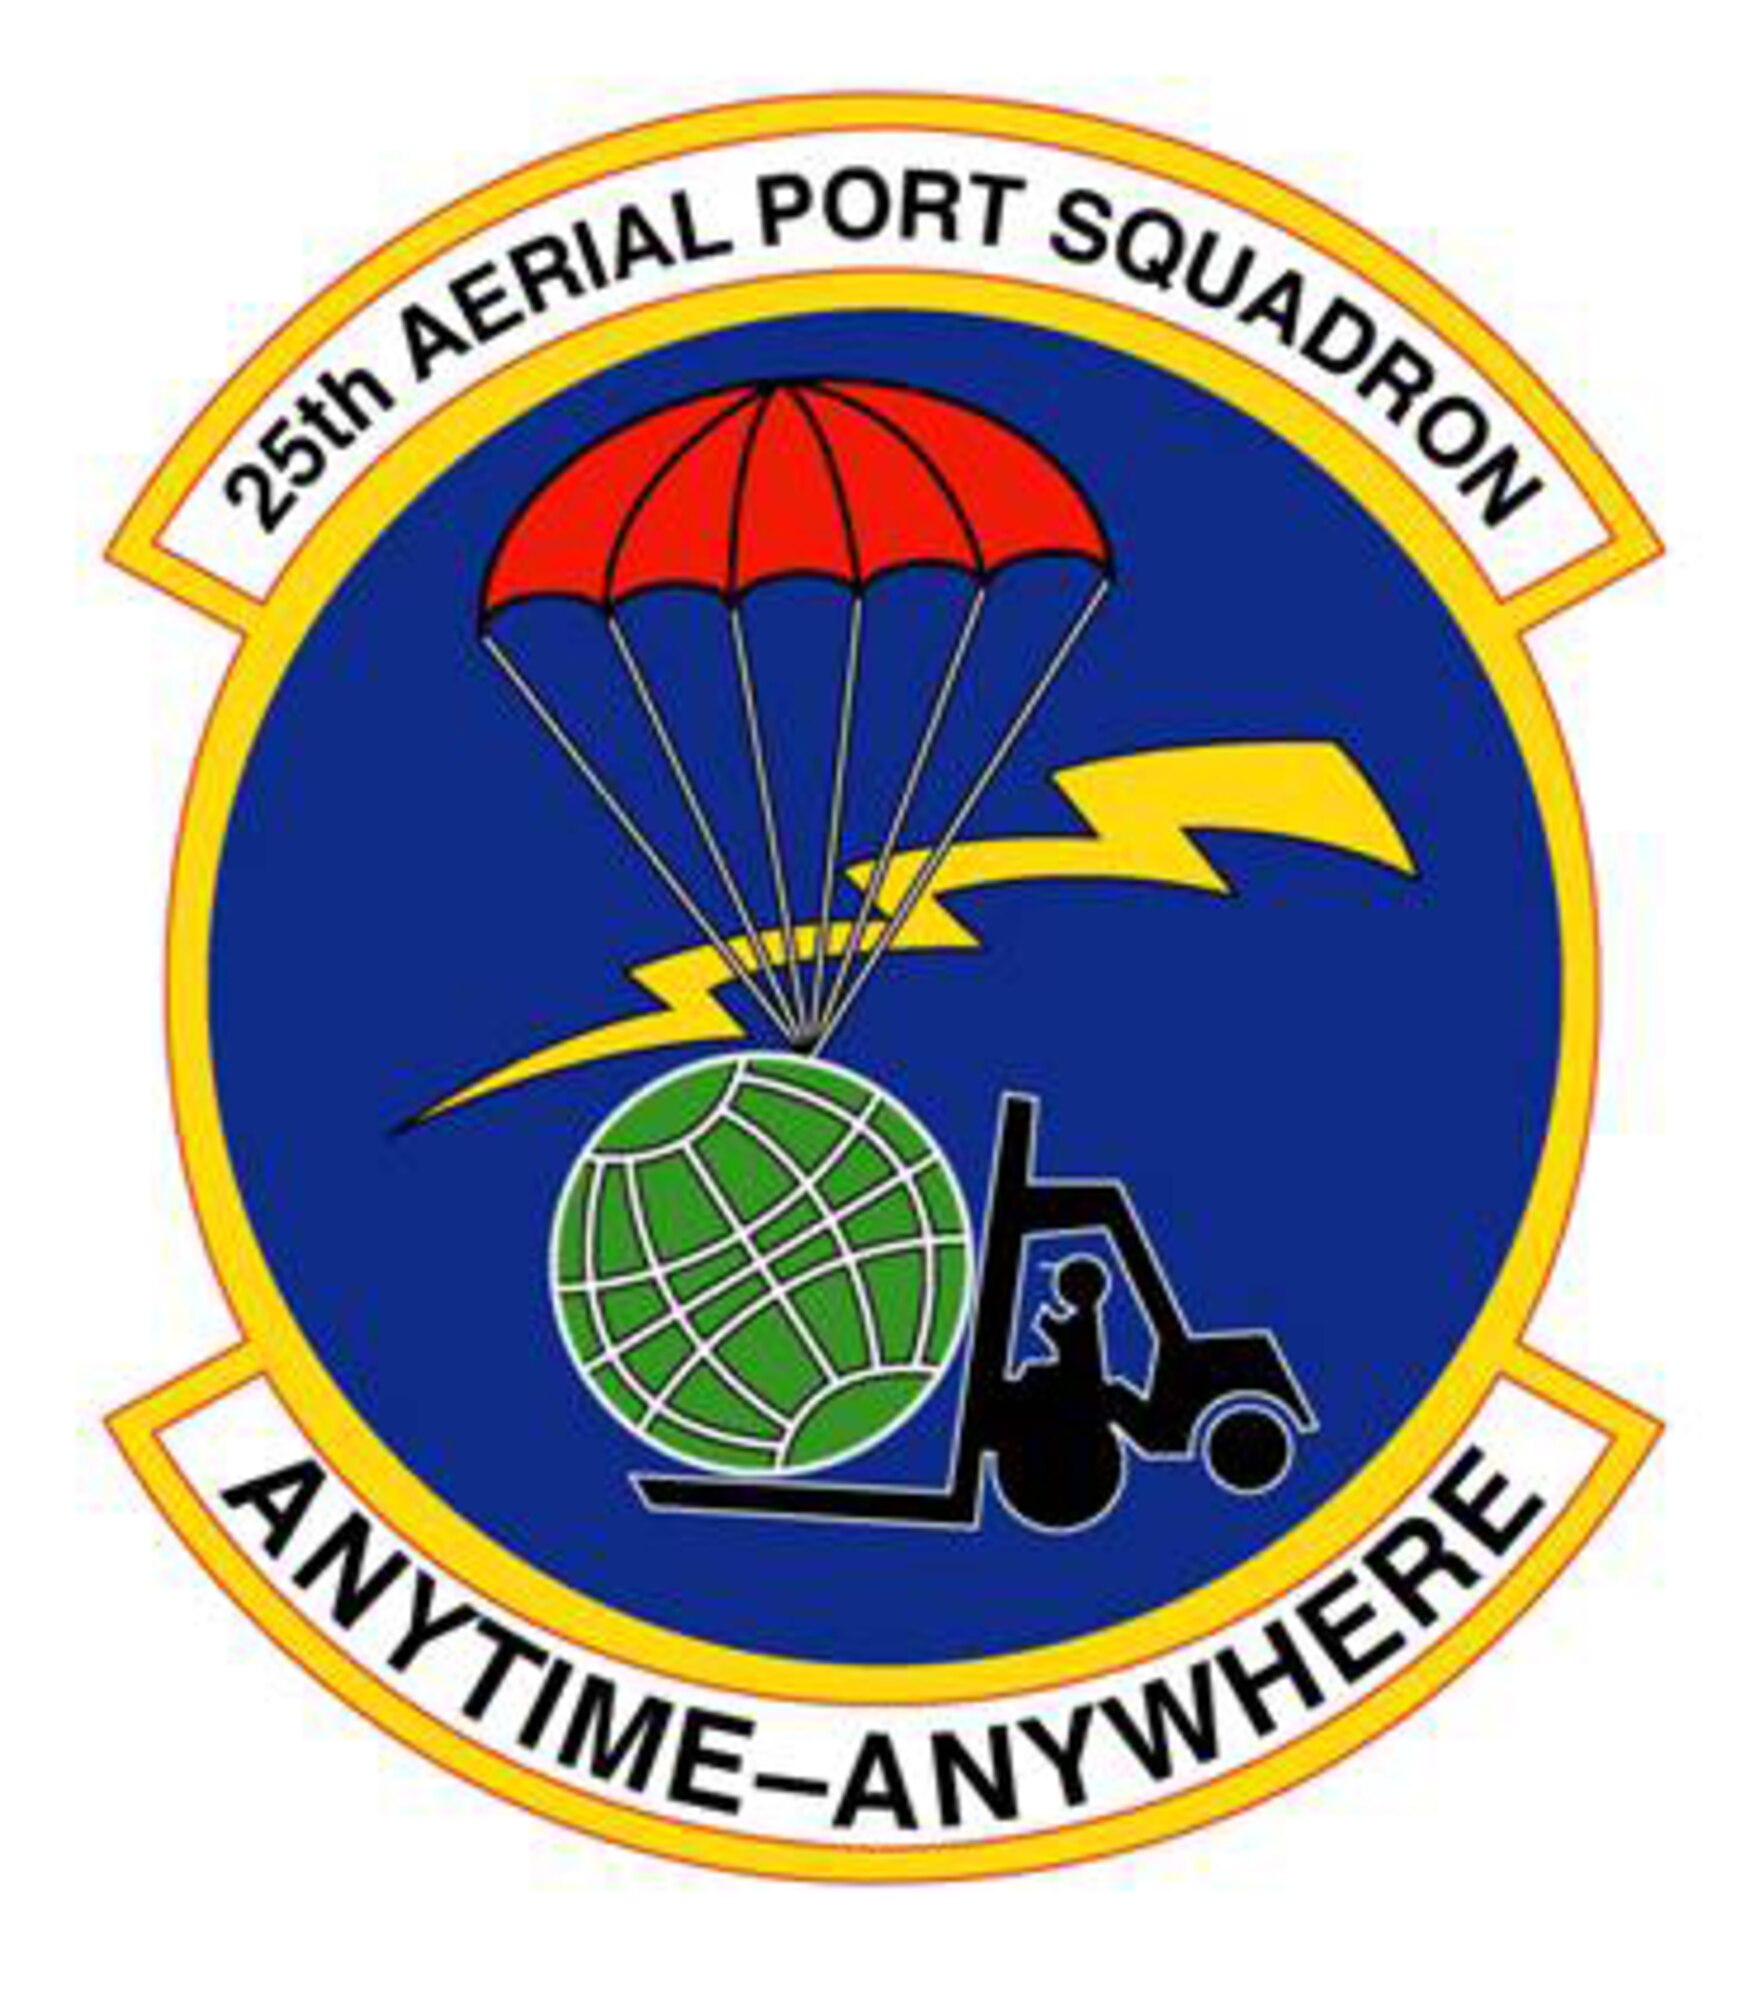 25th Aerial Port Squadron